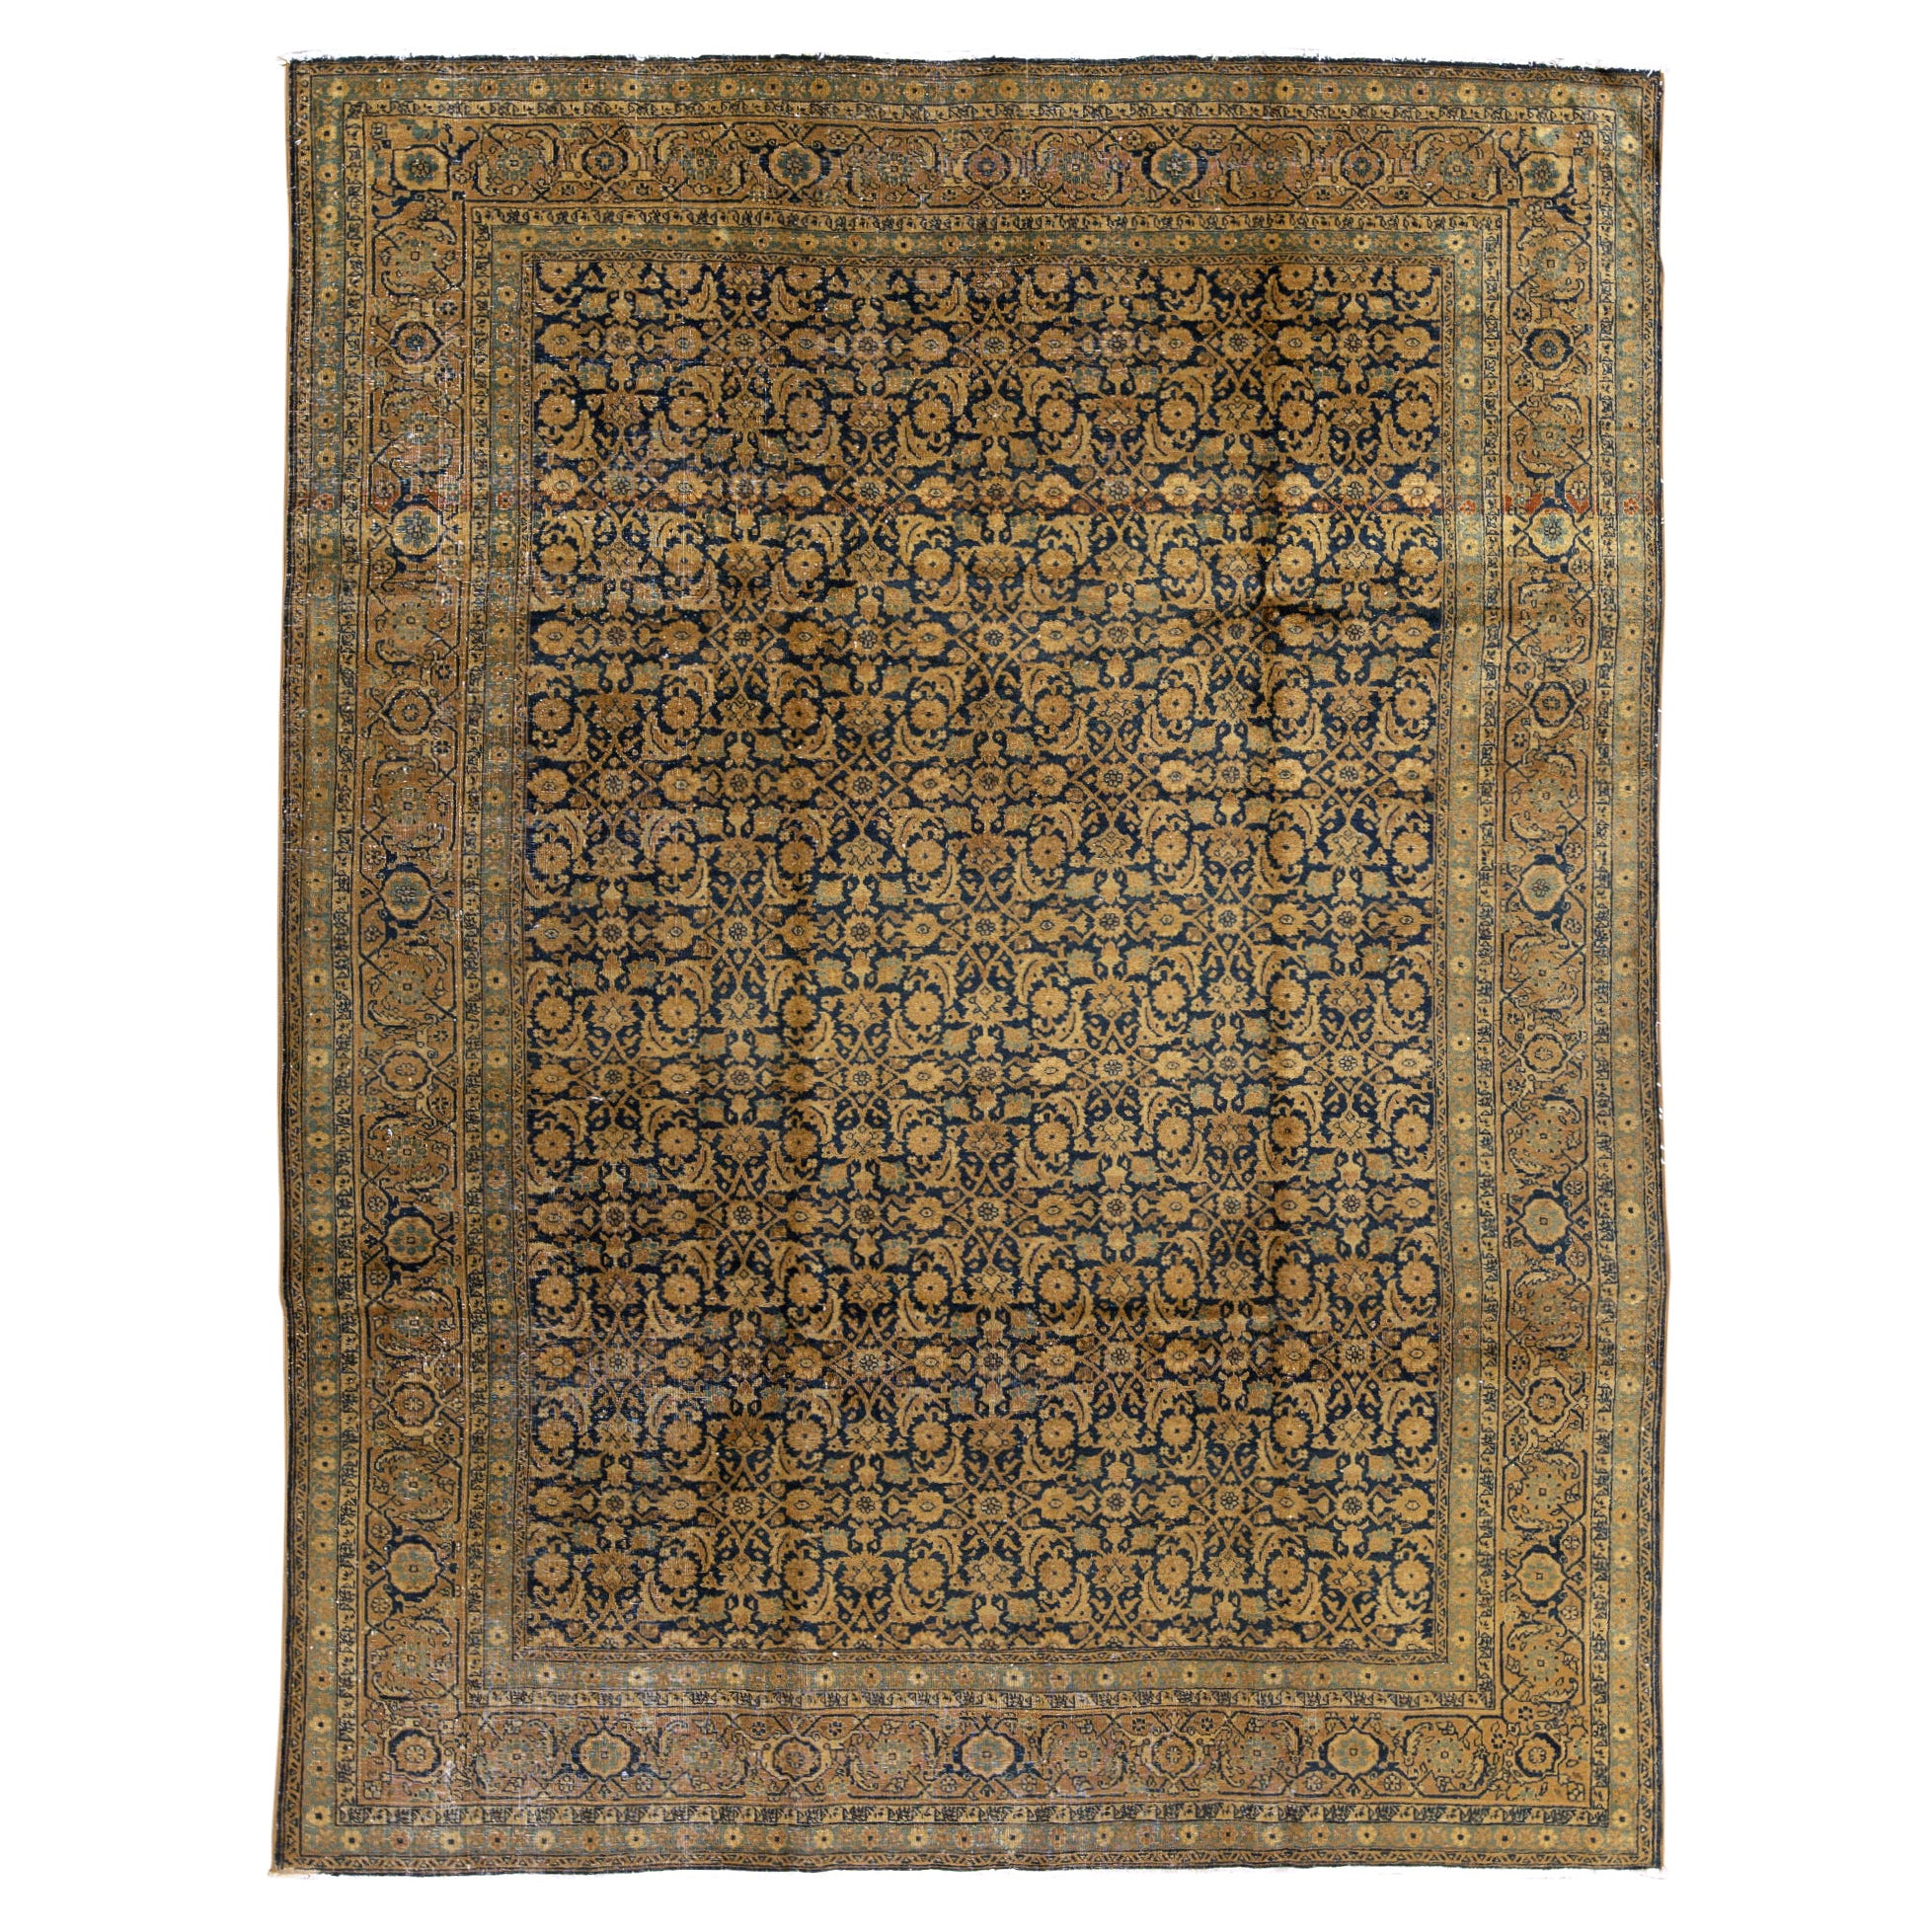 Antique Persian Fine Traditional Handwoven Luxury Wool Navy / Rust Rug